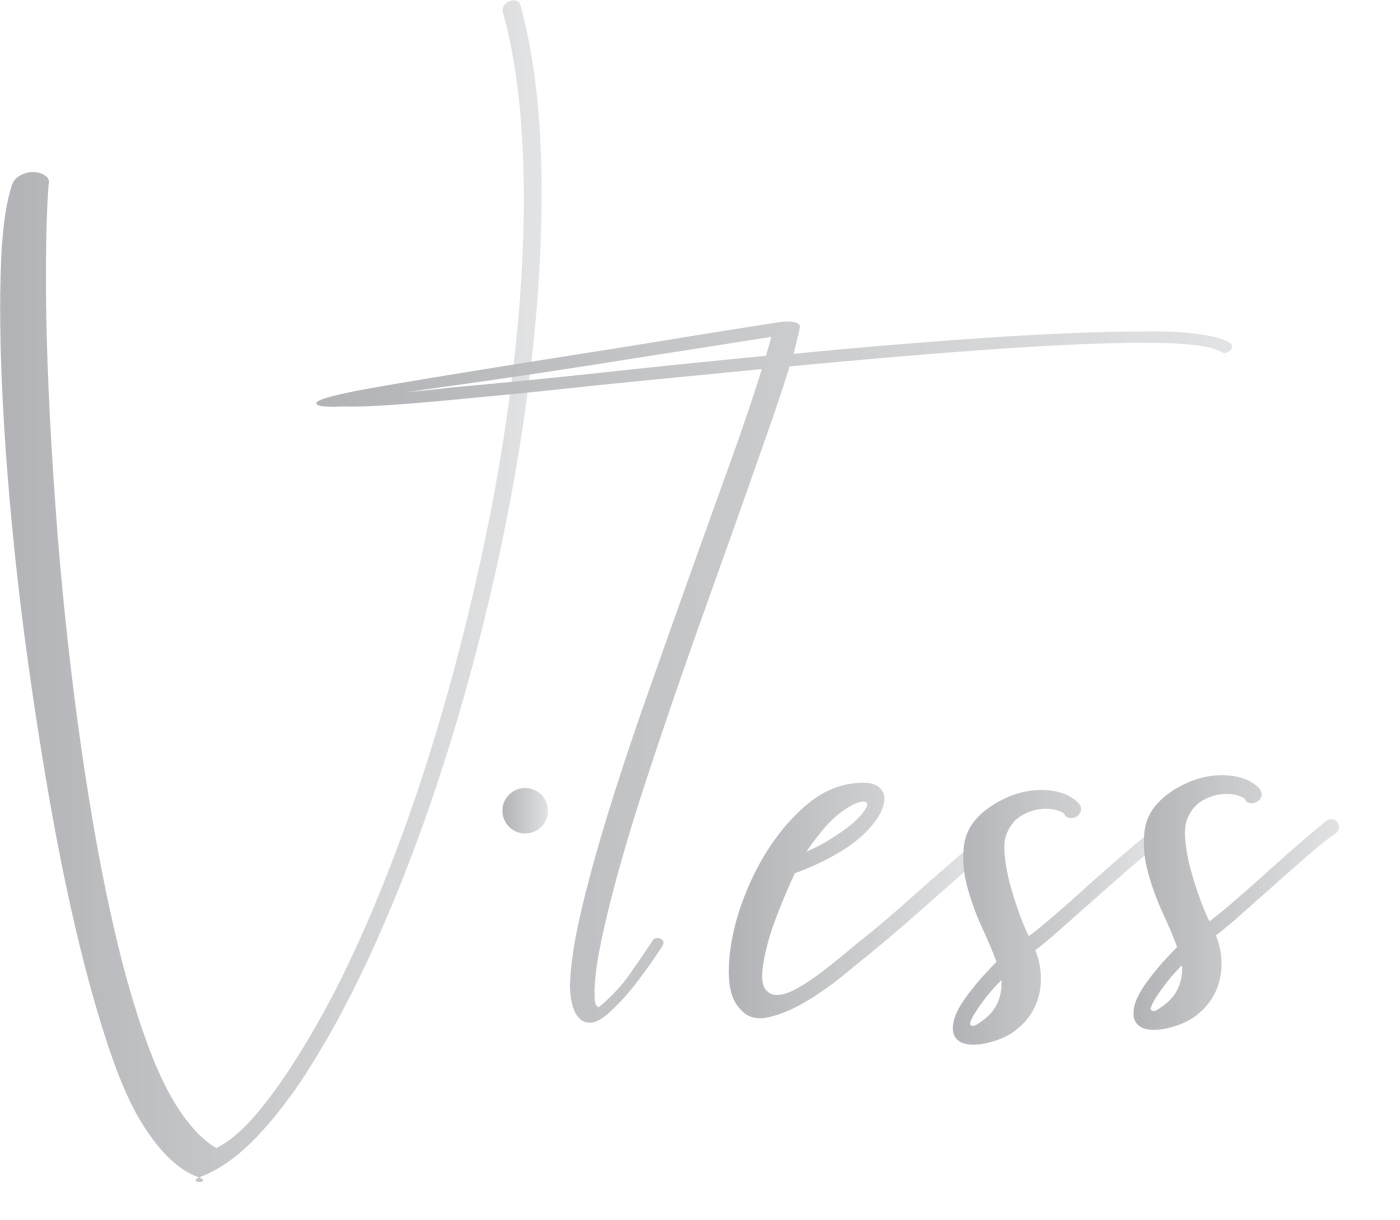 V-Tess